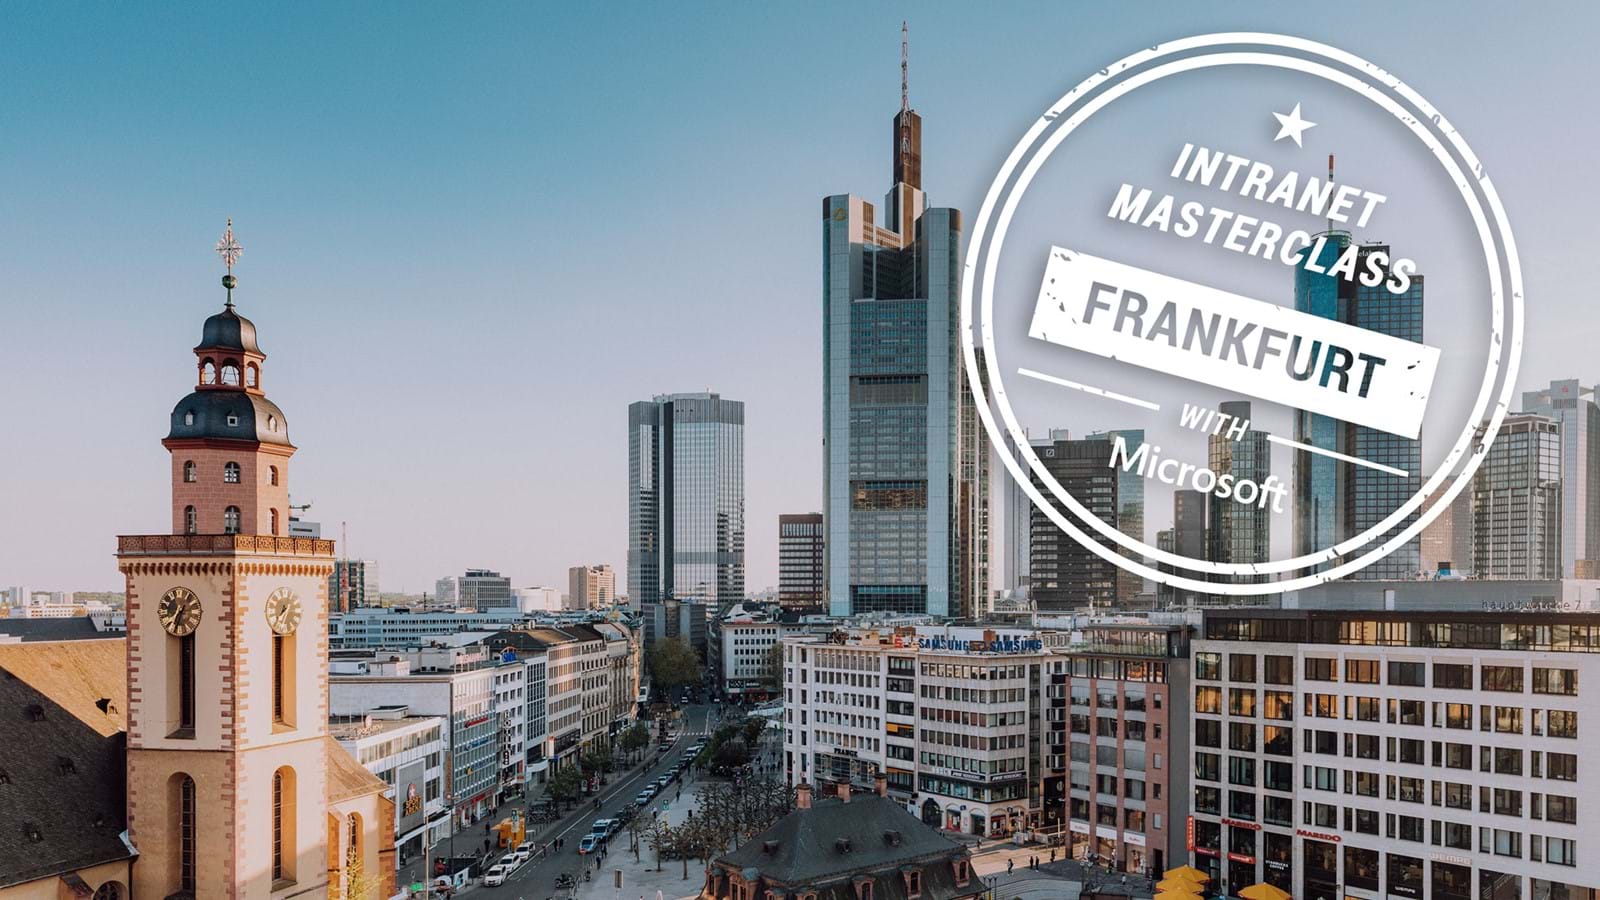 Unily's intranet masterclass event in Frankfurt